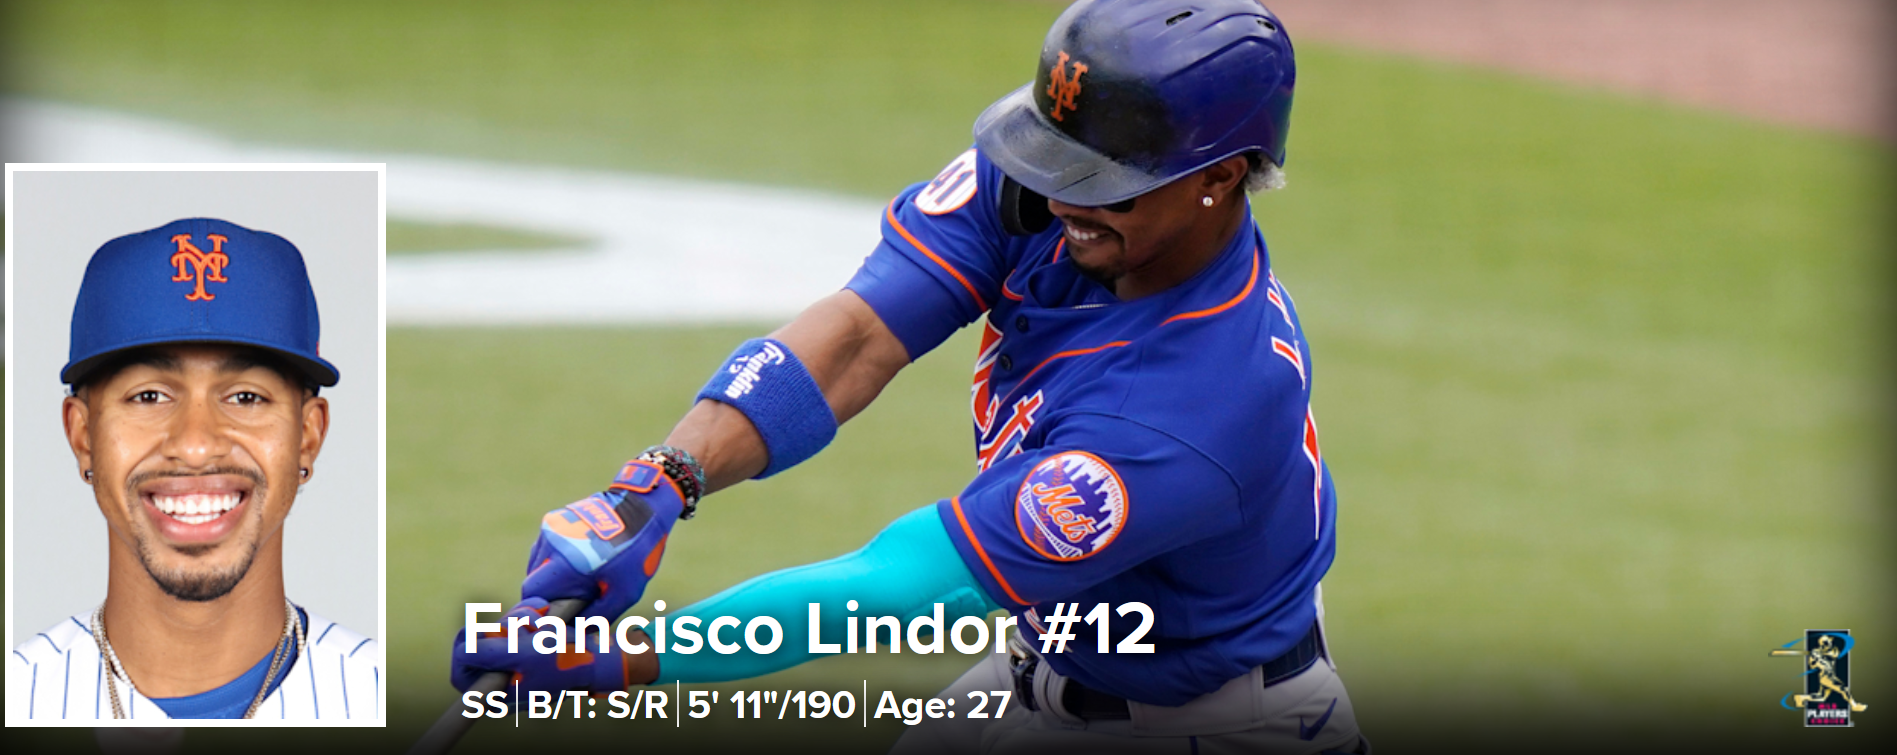 Francisco Lindor, Baseball Wiki